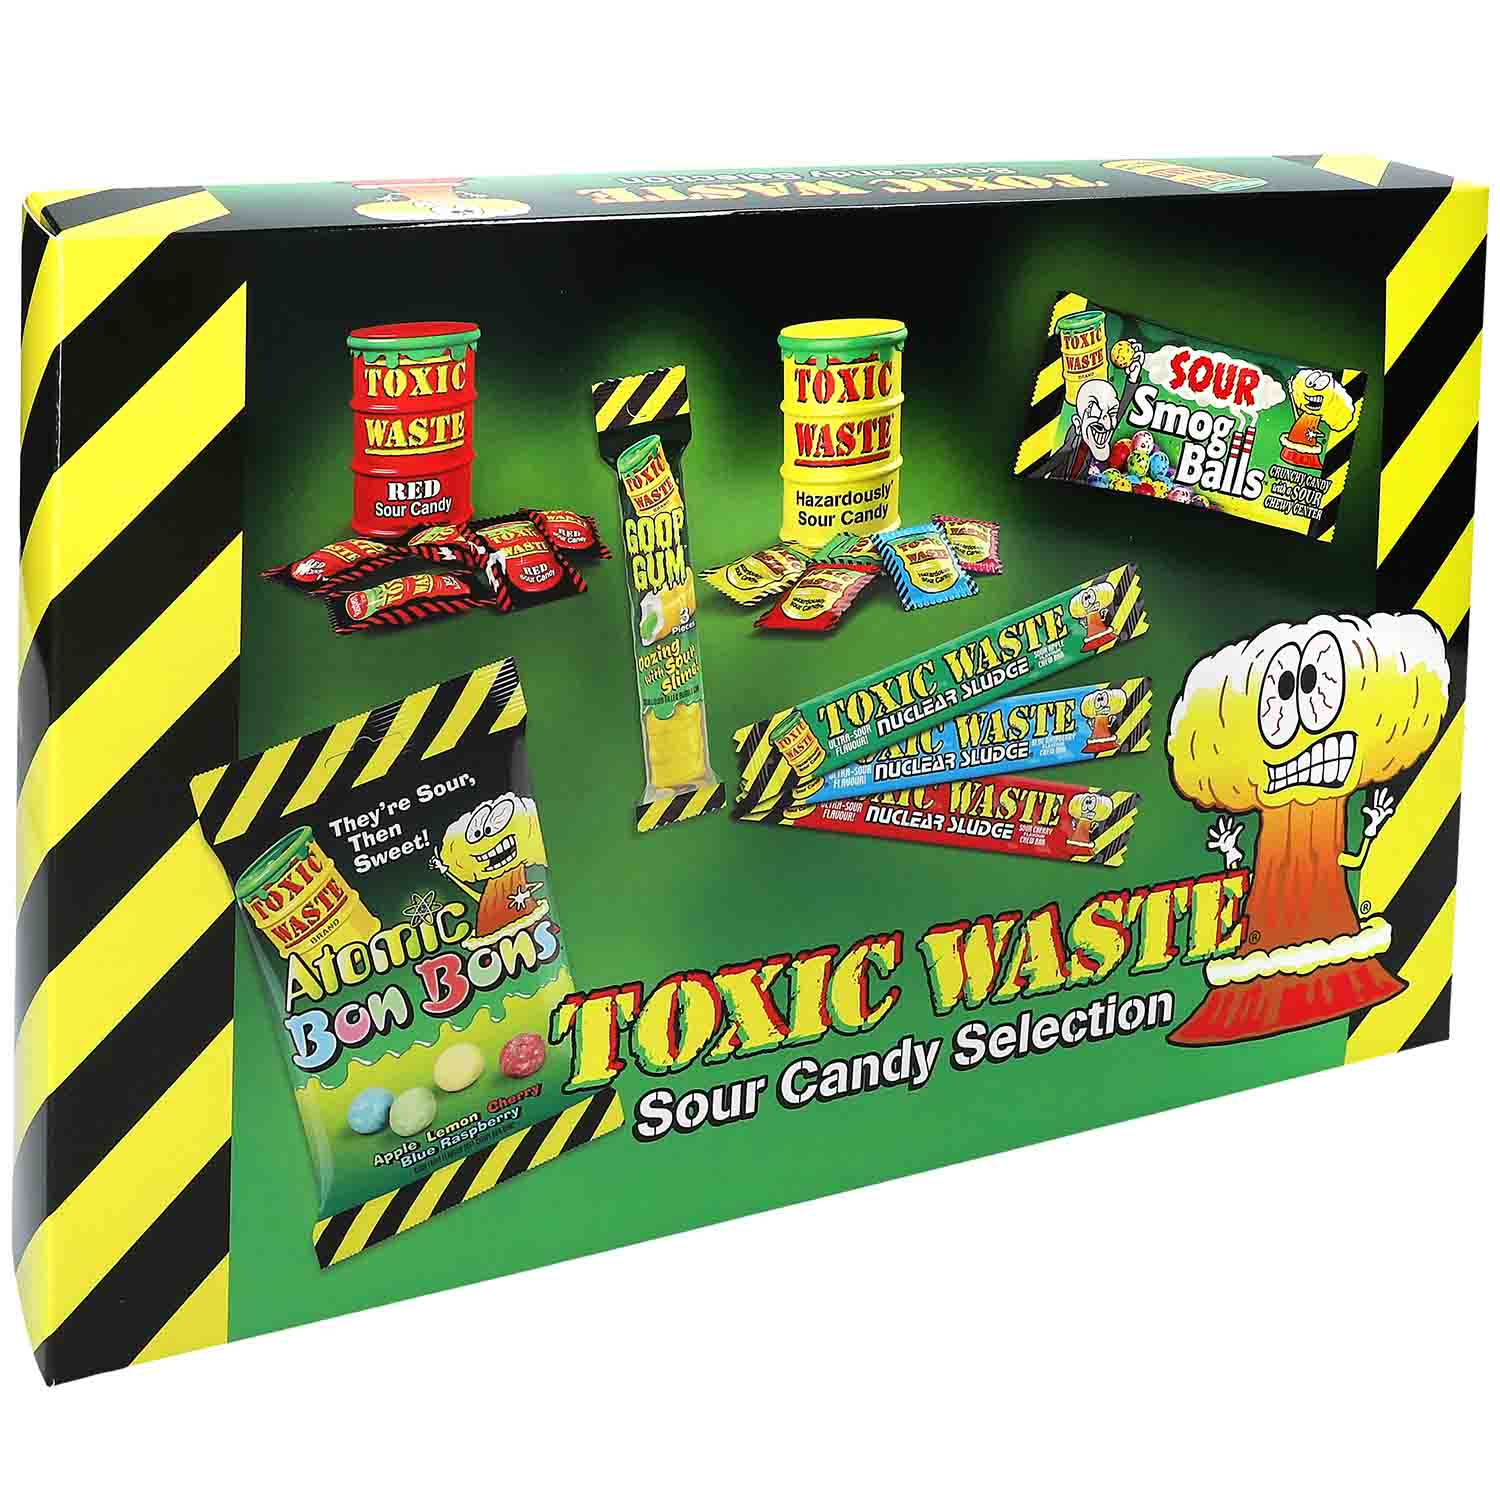 Токсик 5. Набор конфет Toxic waste. Набор кислых конфет Toxic waste. Соур Канди кислая конфета. Кислые конфеты Токсик Вейст.